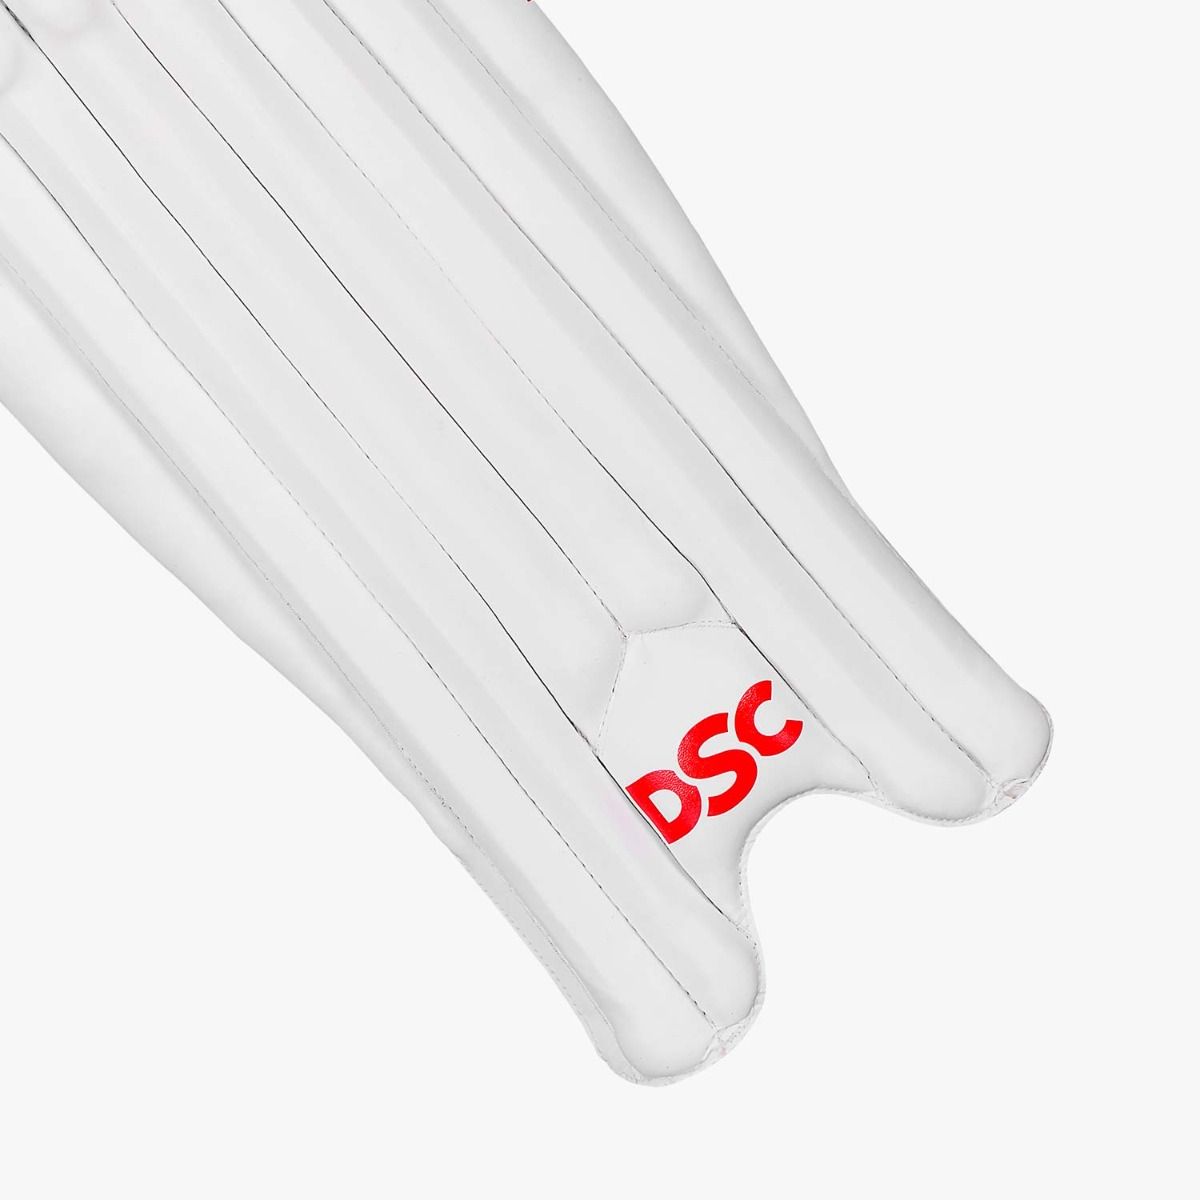 DSC Flip 5.0 Batting Pads